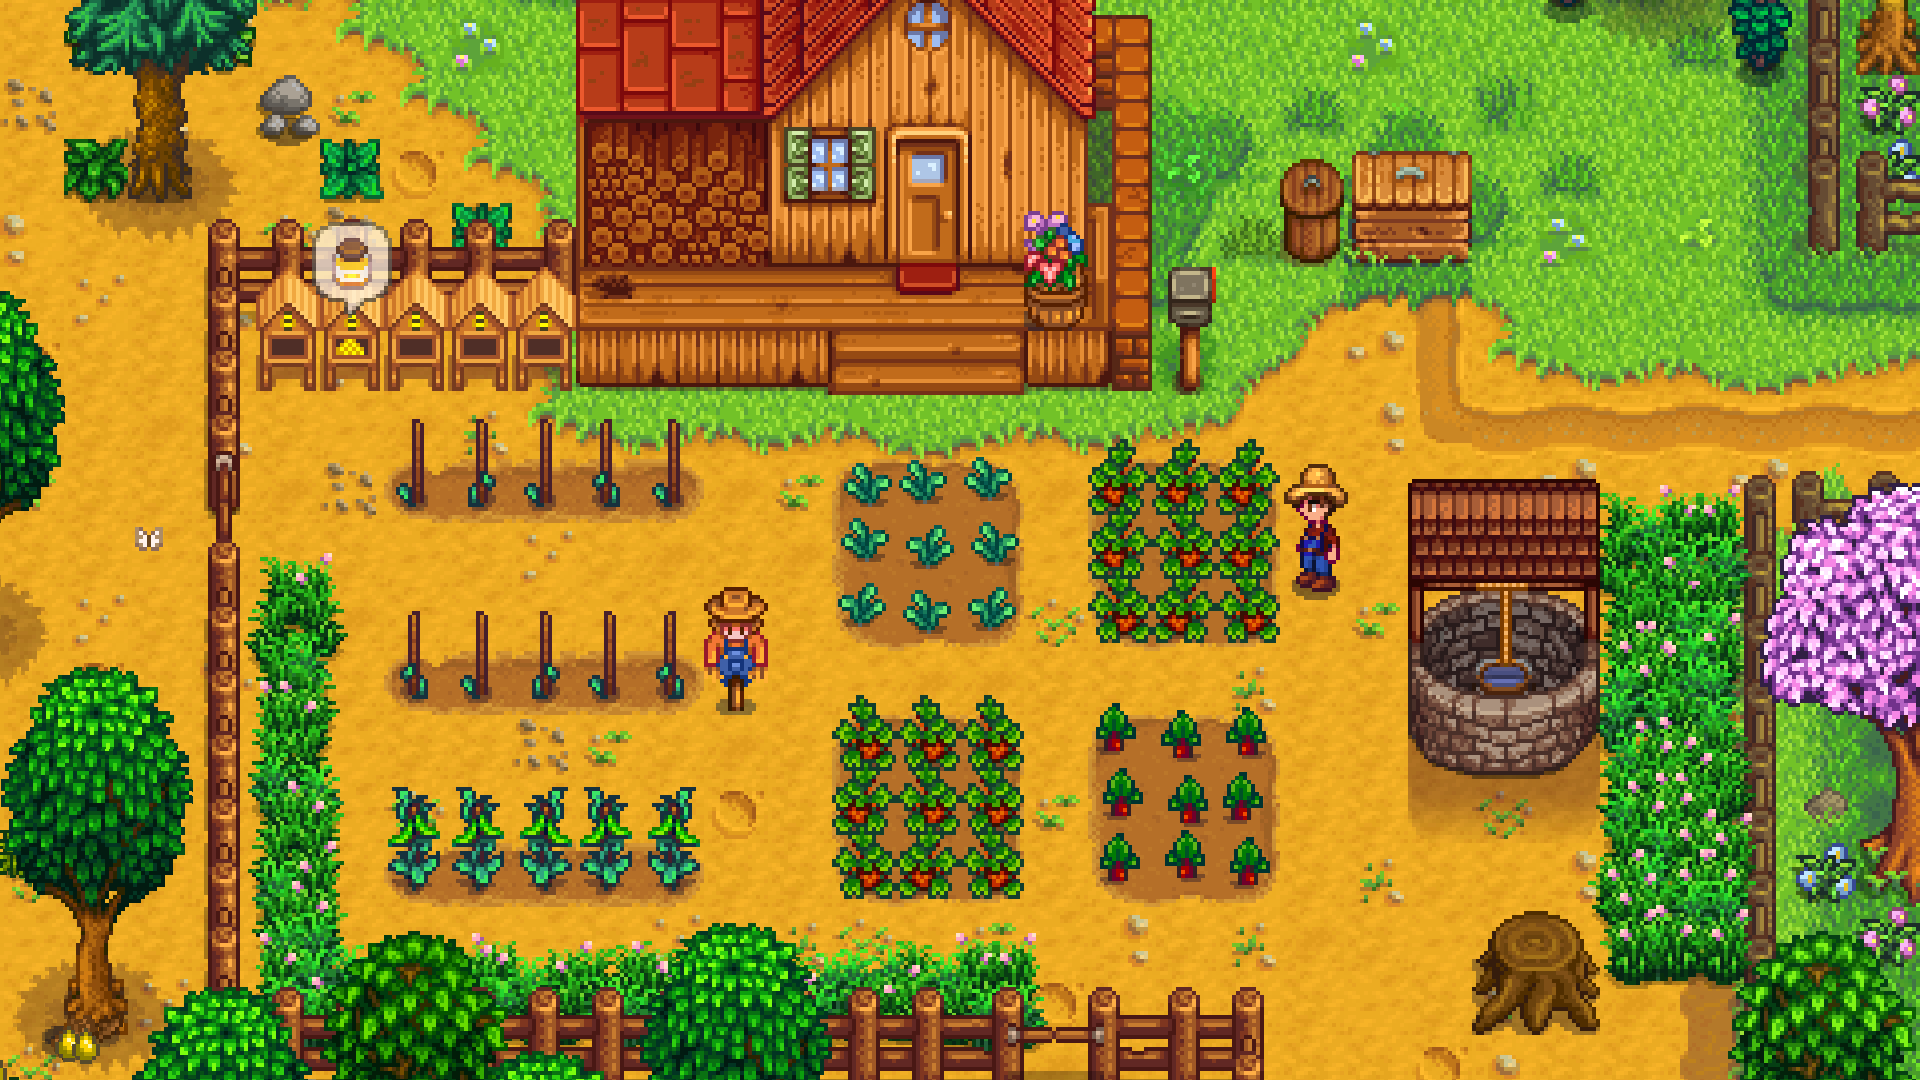 Farming in a Stardew Valley screenshot.